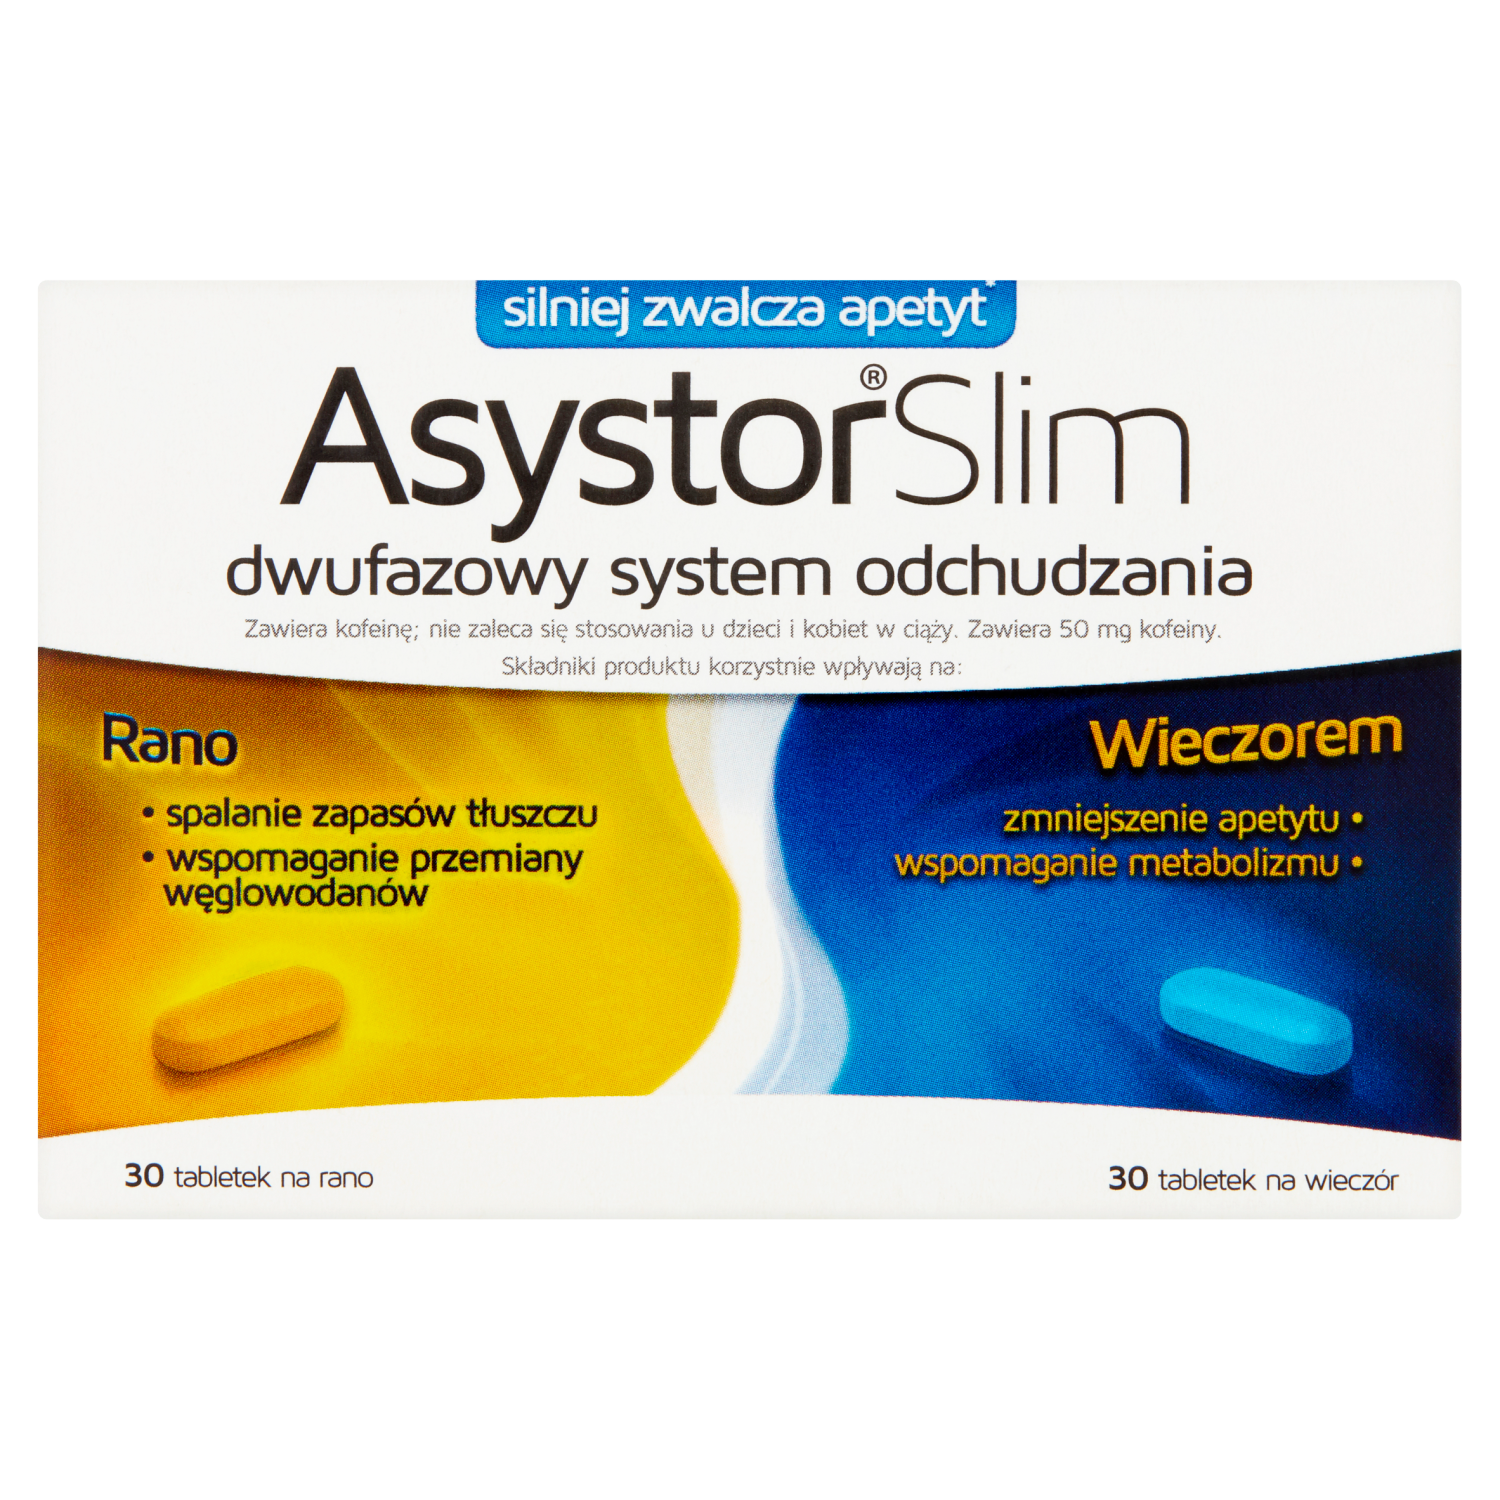 vita miner prenatal биологически активная добавка 60 таблеток 1 упаковка Asystor Slim биологически активная добавка, 60 таблеток/1 упаковка